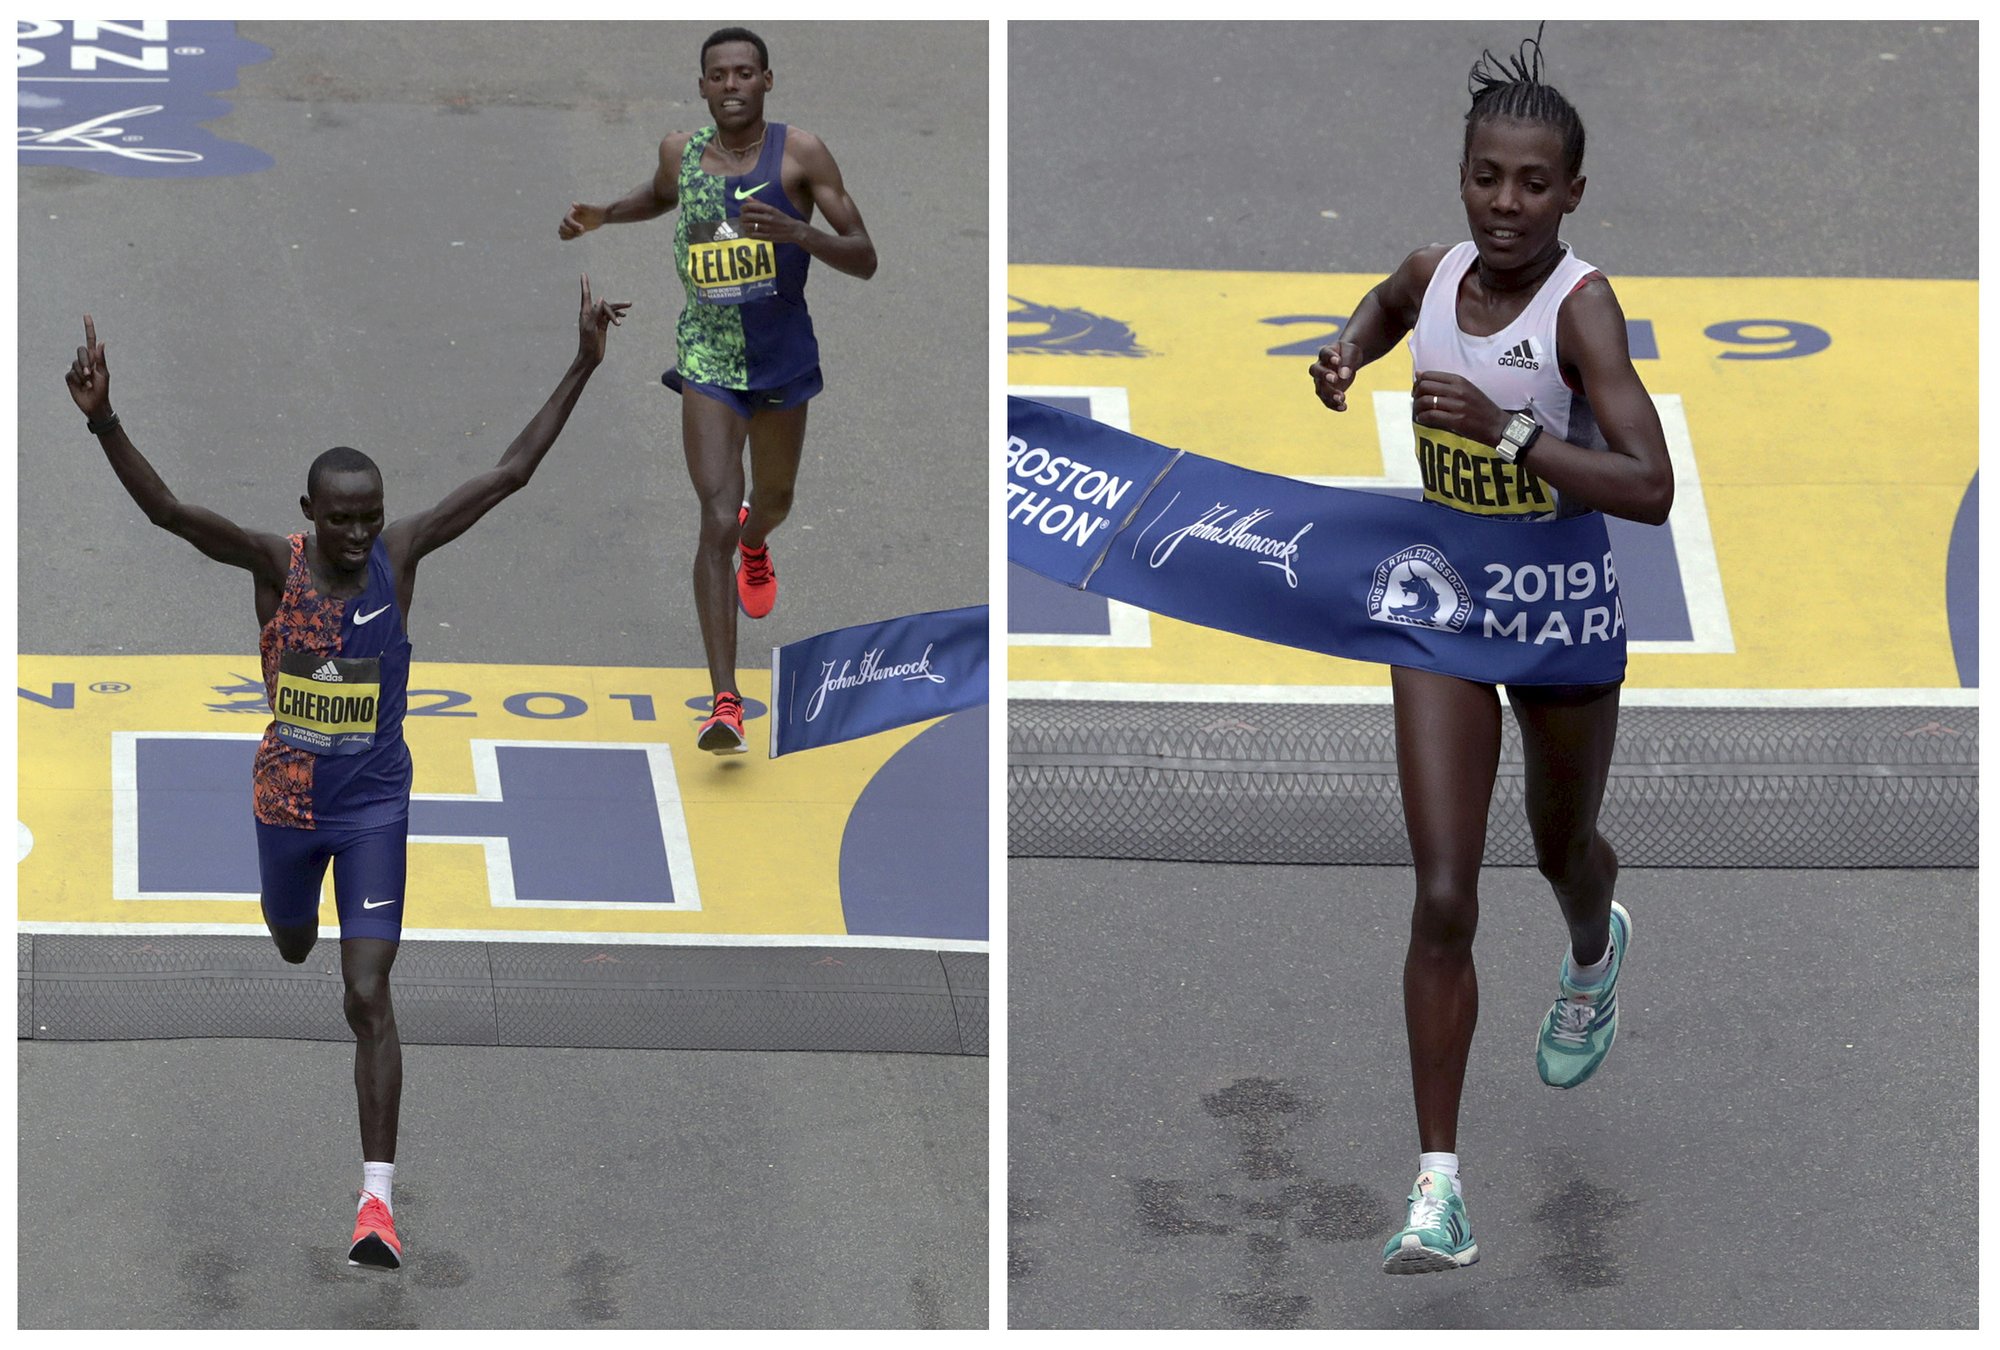 Kenya’s Cherono wins men’s Boston Marathon in sprint to tape